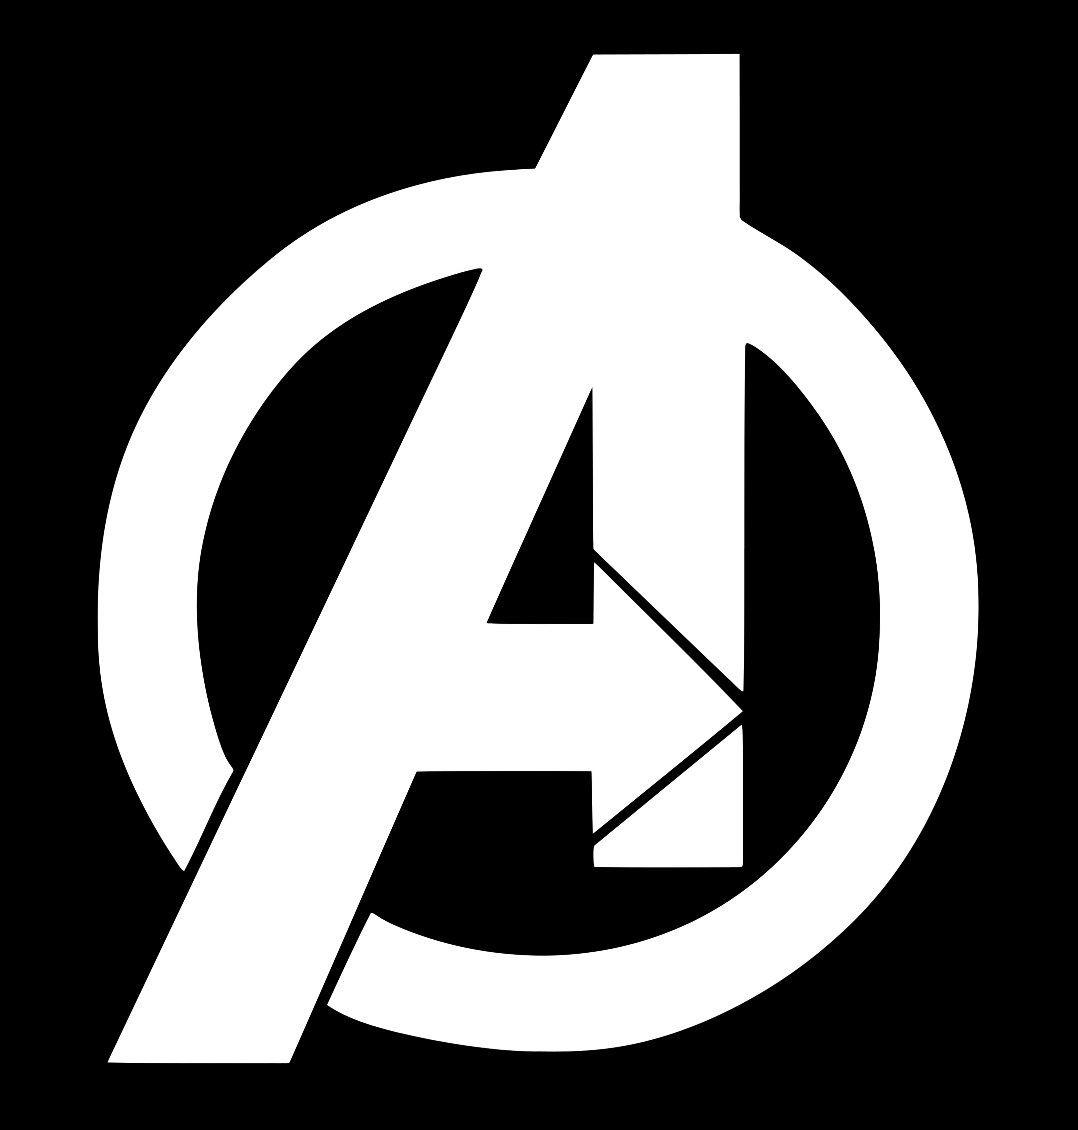 Vinyl Logo - UR Impressions Avengers Logo Decal Vinyl Sticker Graphics for Cars Trucks  SUV Vans Walls Windows Laptop|White|5.5 X 5.3 Inch|URI351